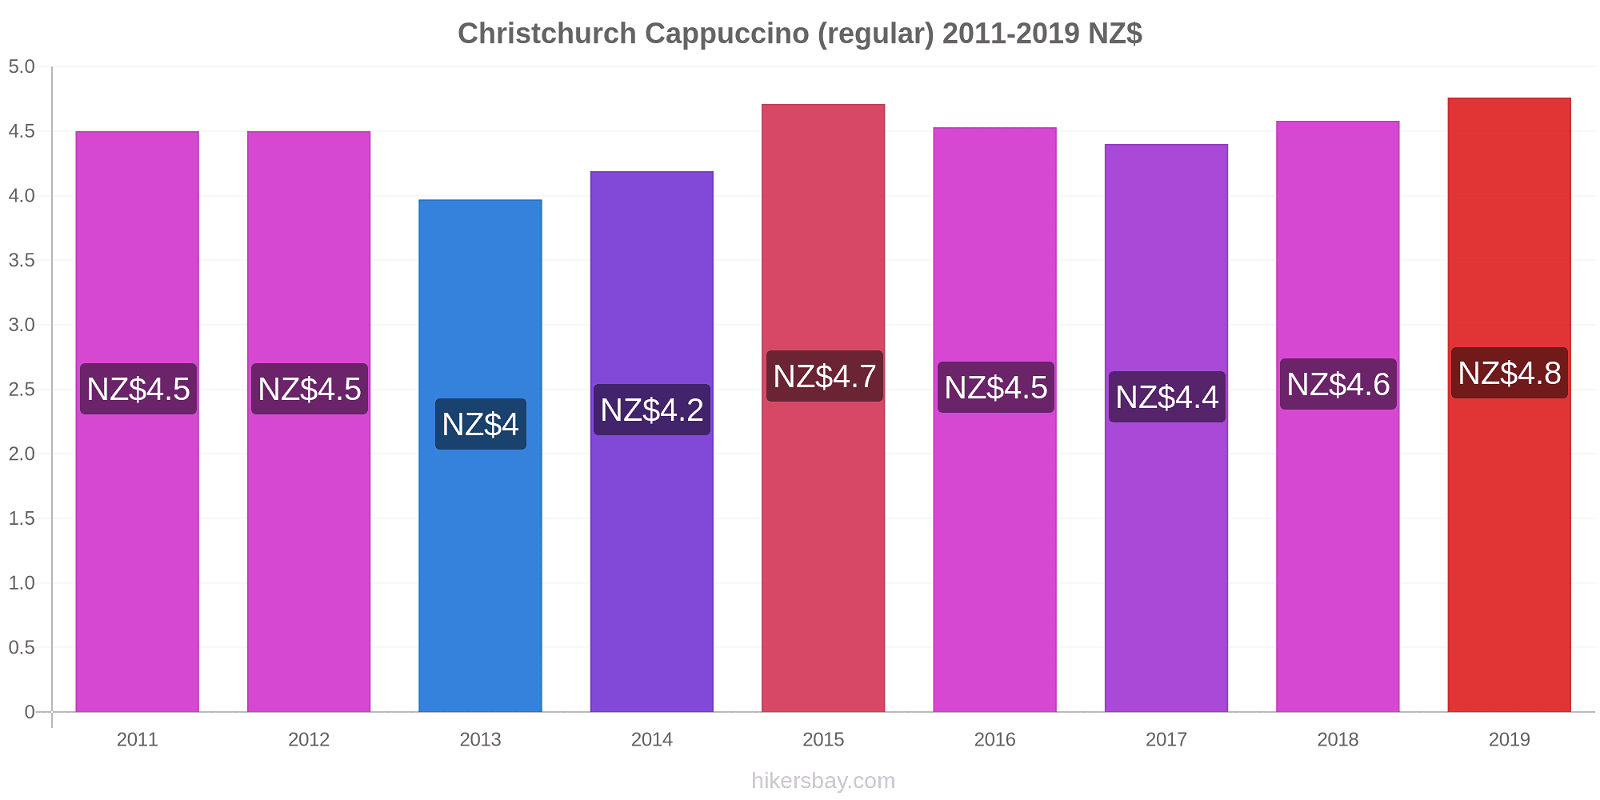 Christchurch price changes Cappuccino (regular) hikersbay.com